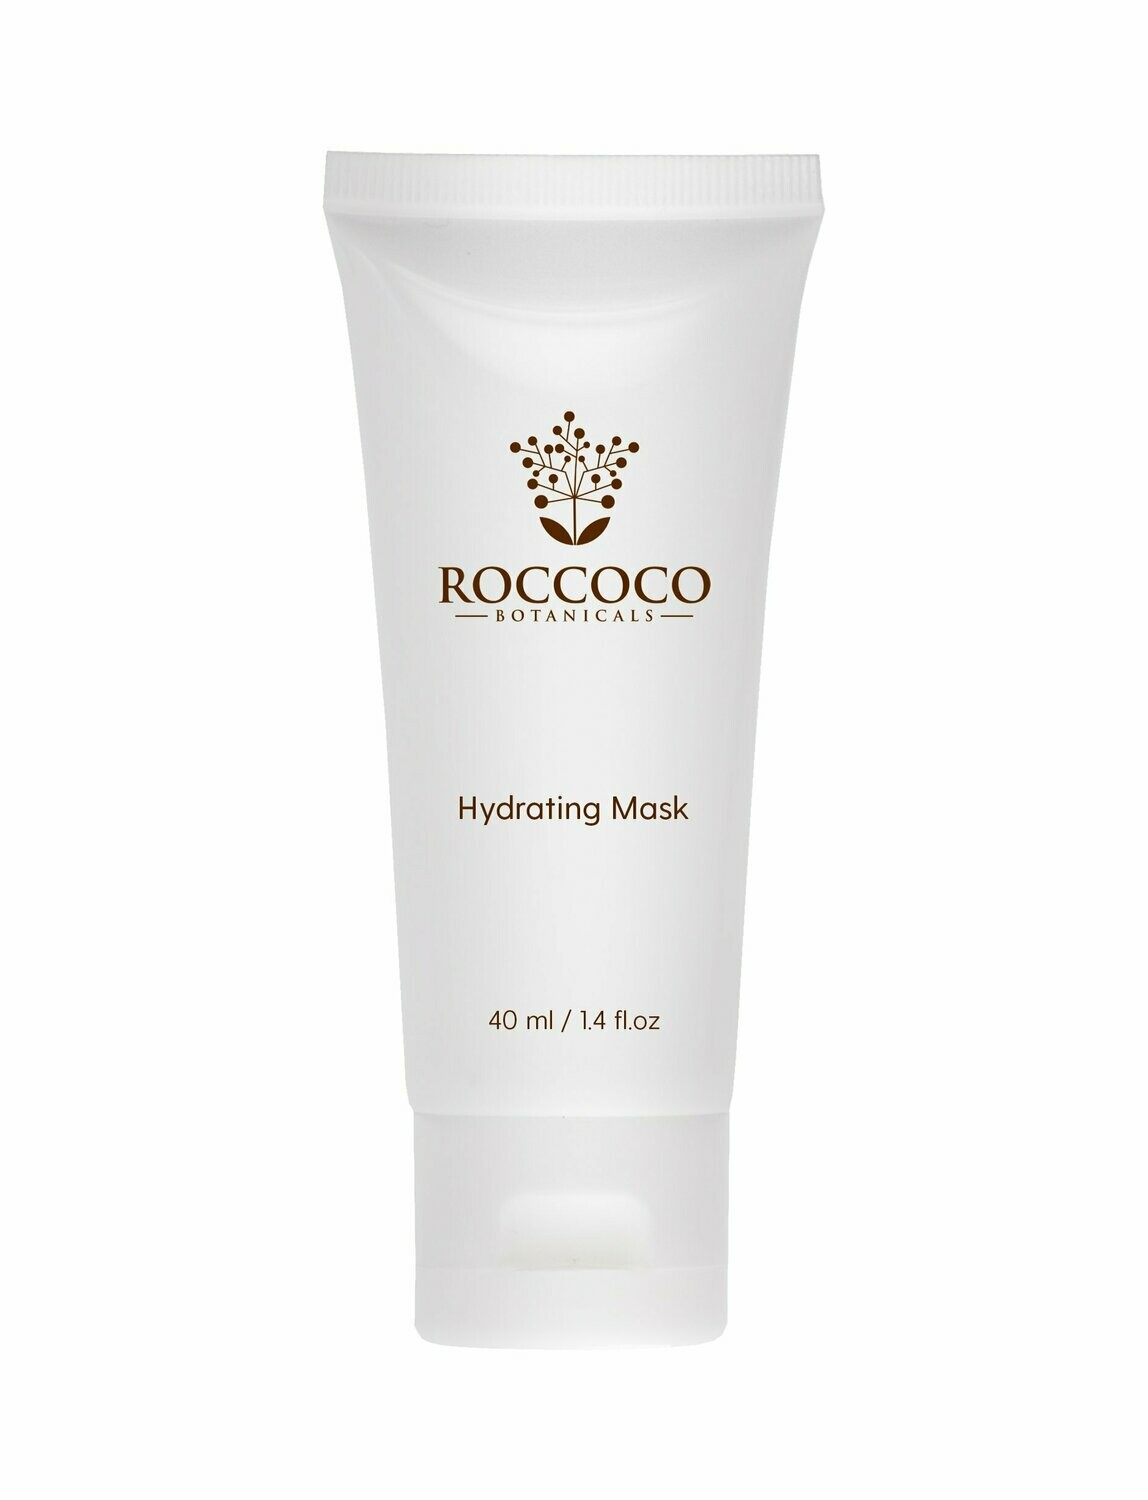 Roccoco Botanicals Hydrating Mask 1.7oz